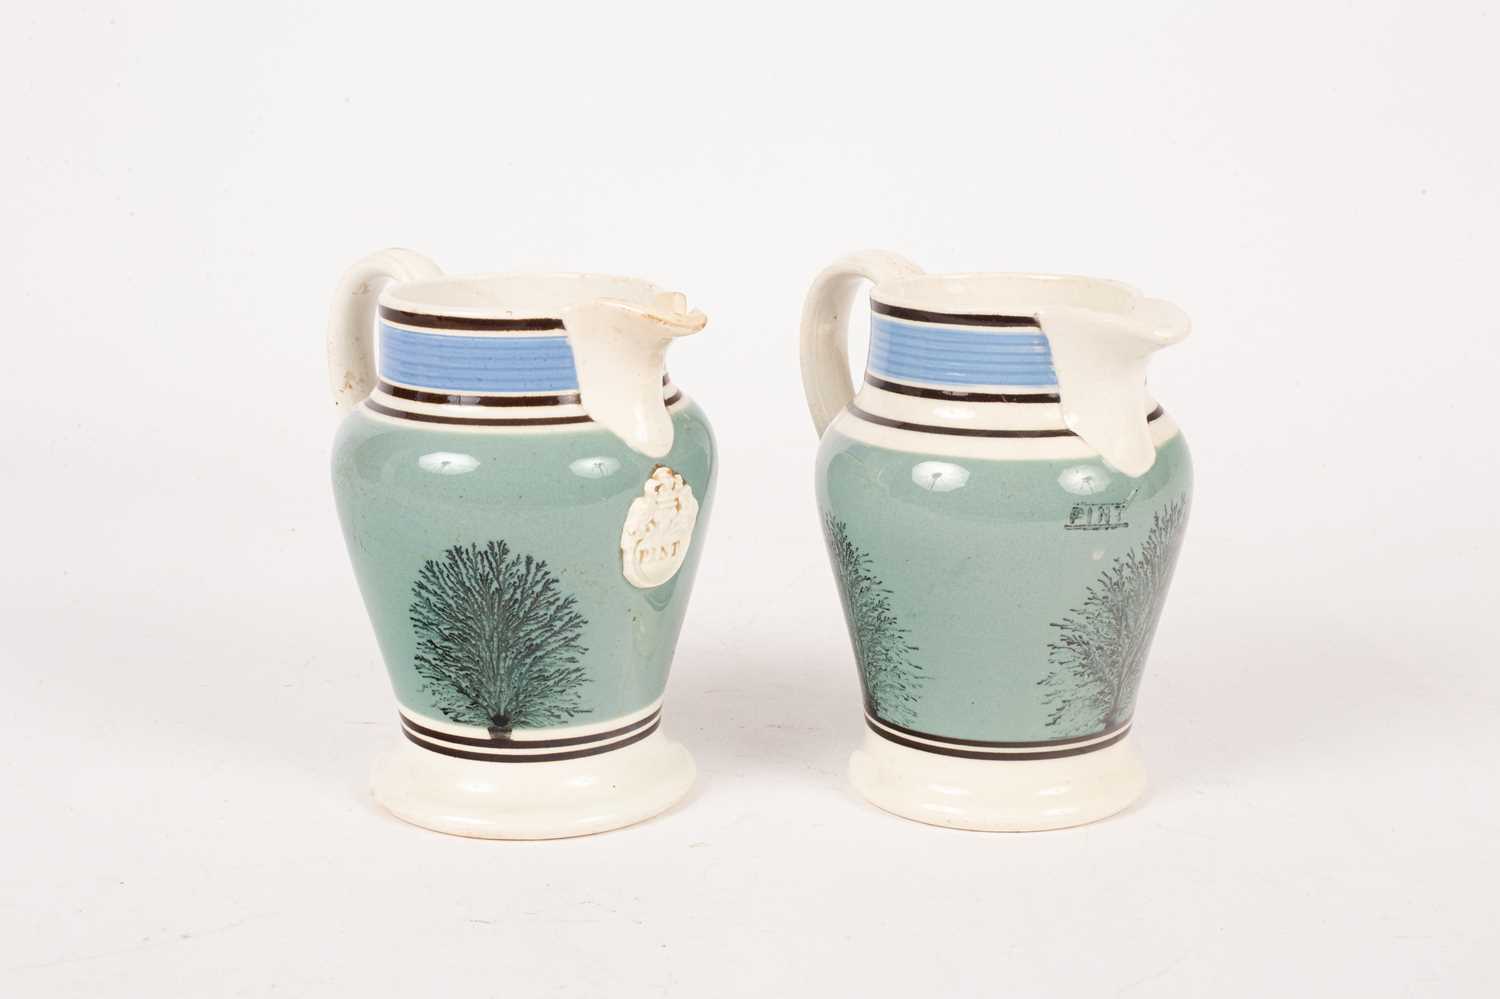 Two 19th Century mochaware jugs